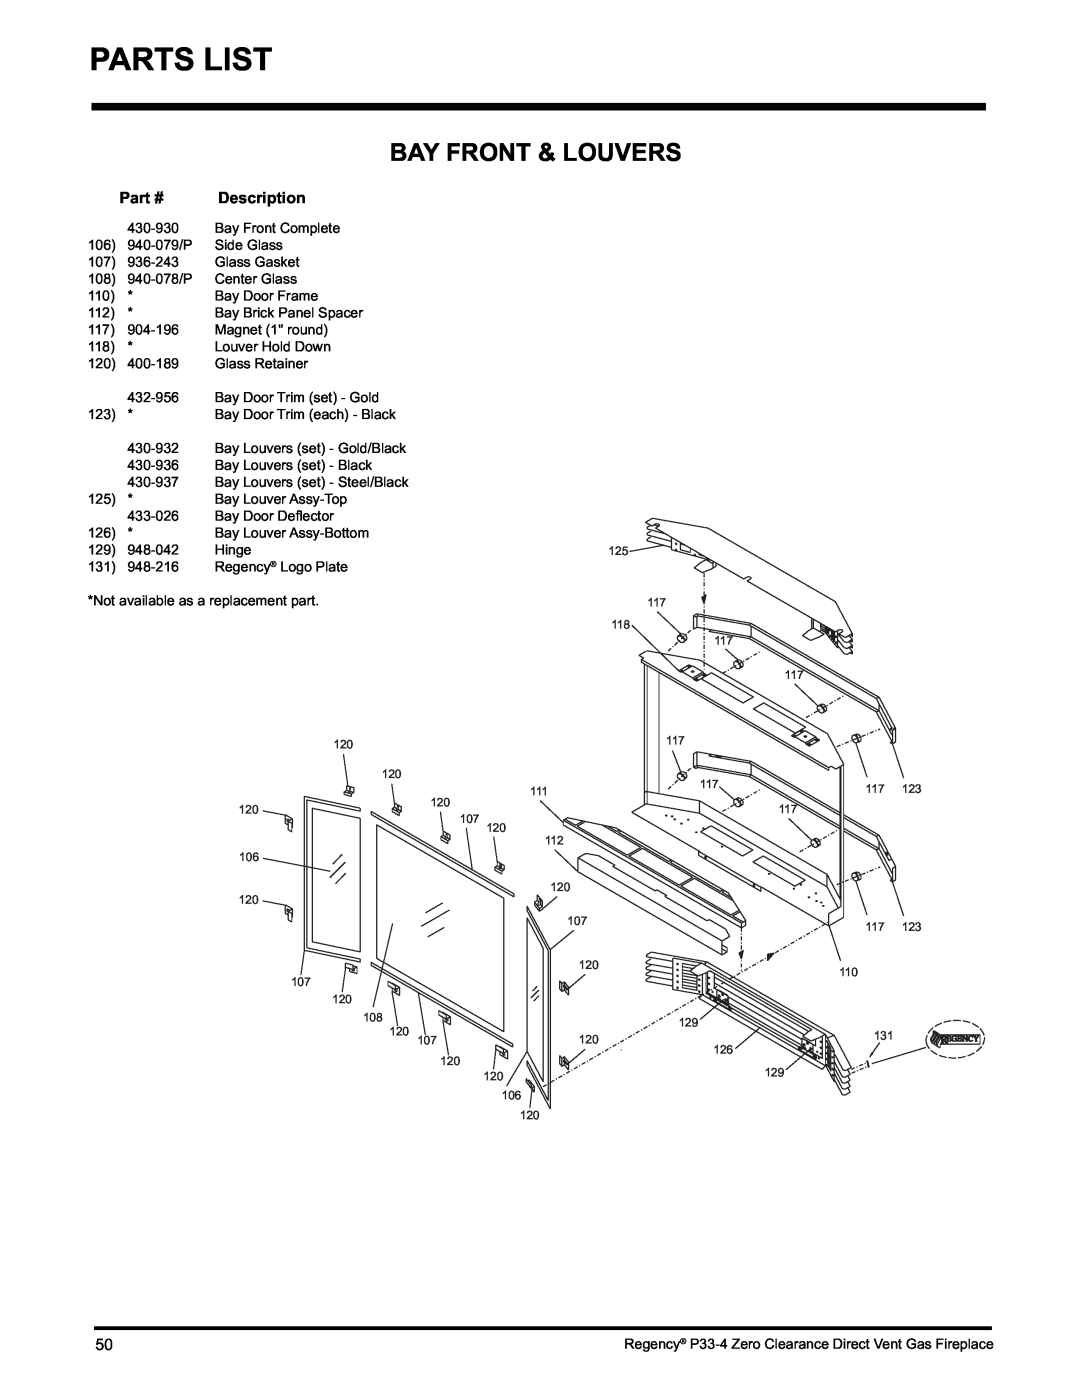 Regency P33-LP4 installation manual Parts List, Bay Front & Louvers 